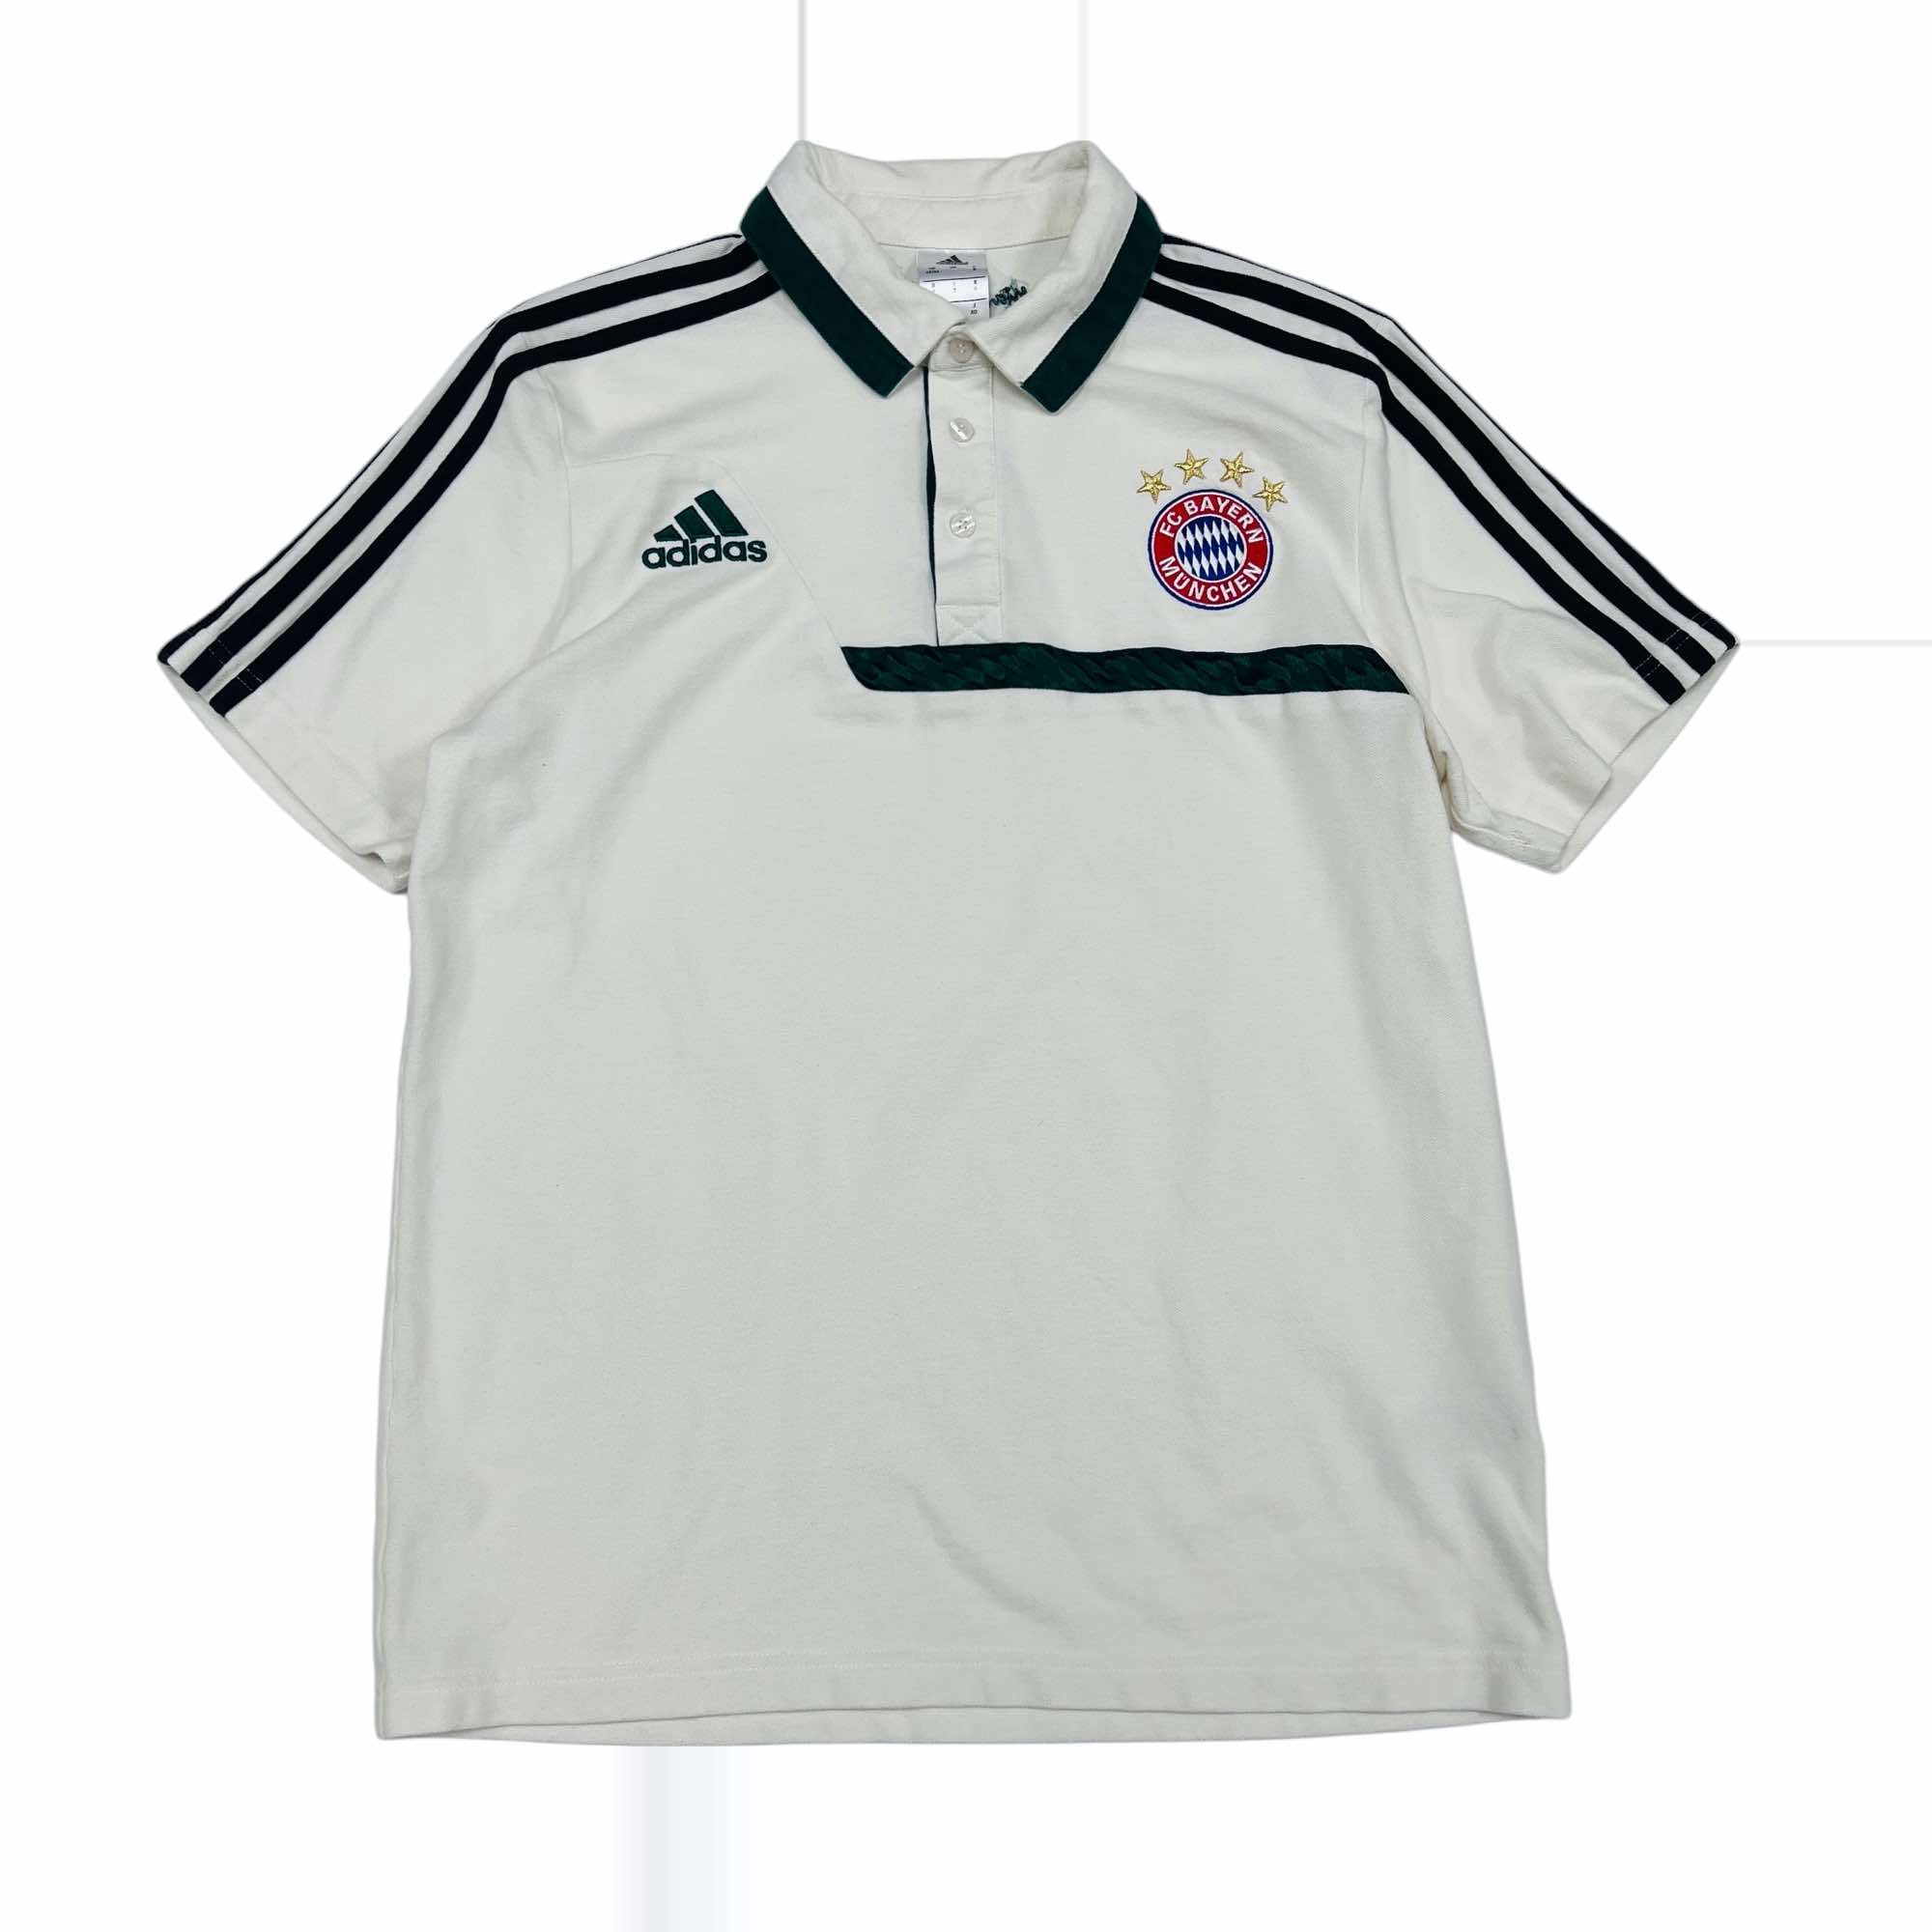 Bayern Munchen Adidas Polo Shirt - Medium